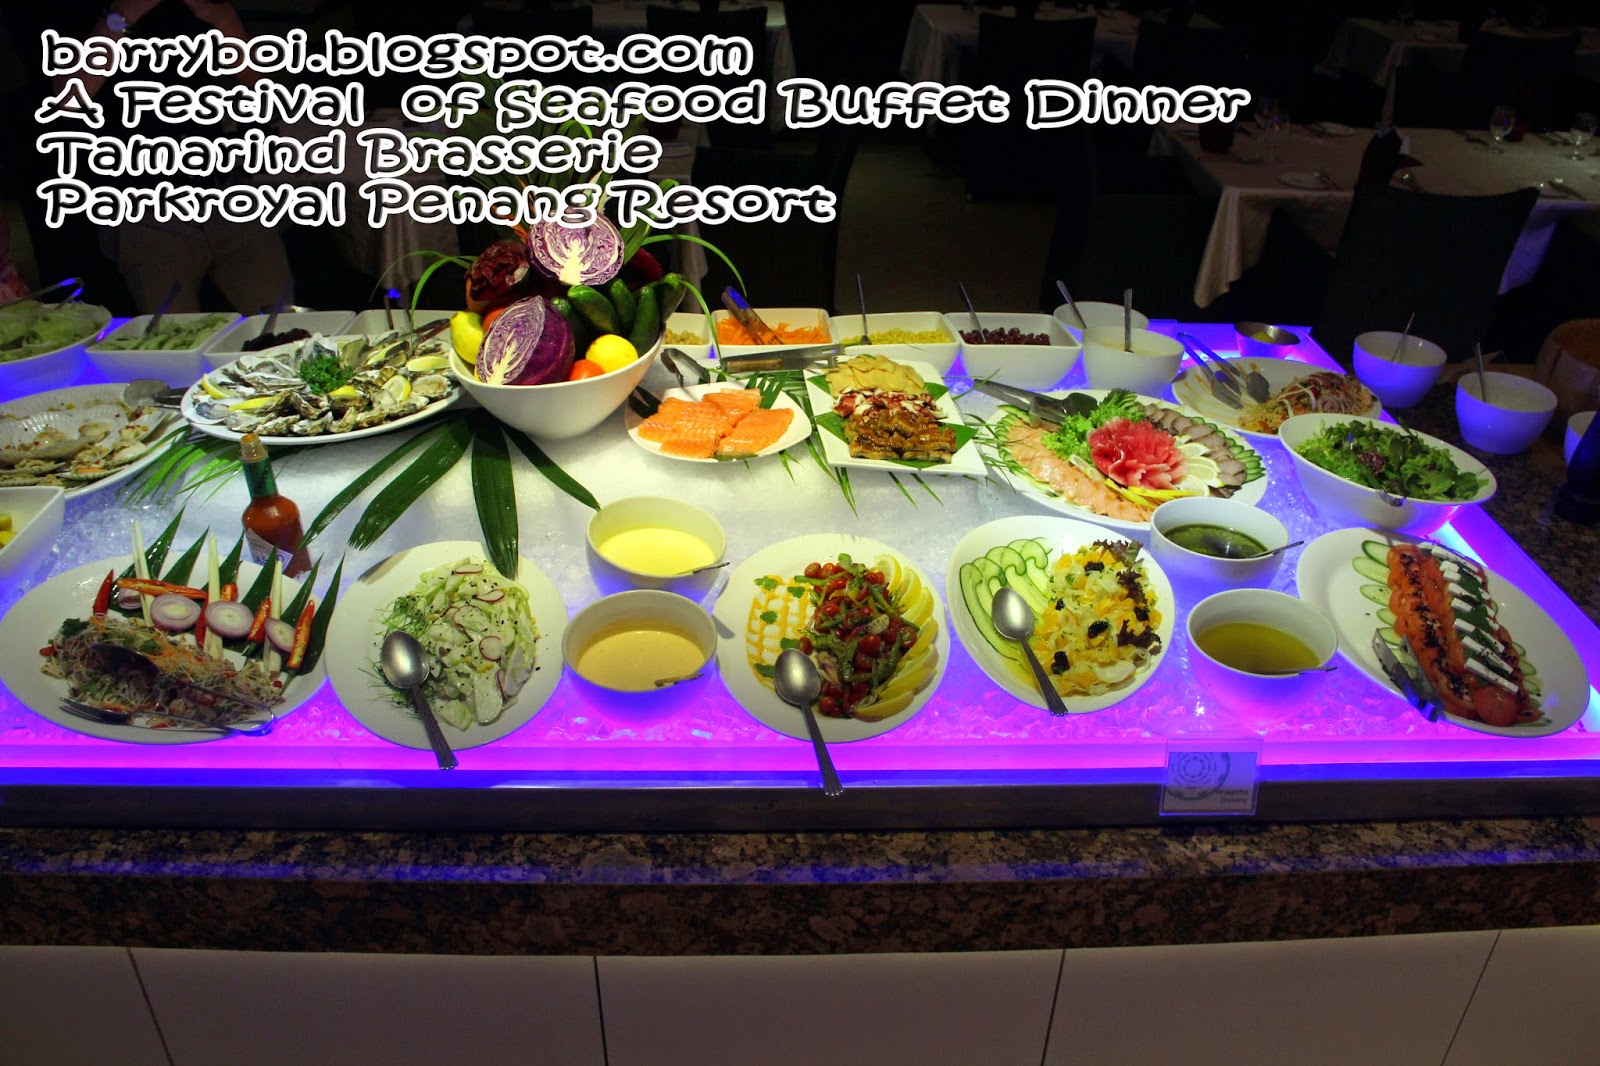 PARKROYAL Penang Resort "A Festival of Seafood Buffet Dinner"